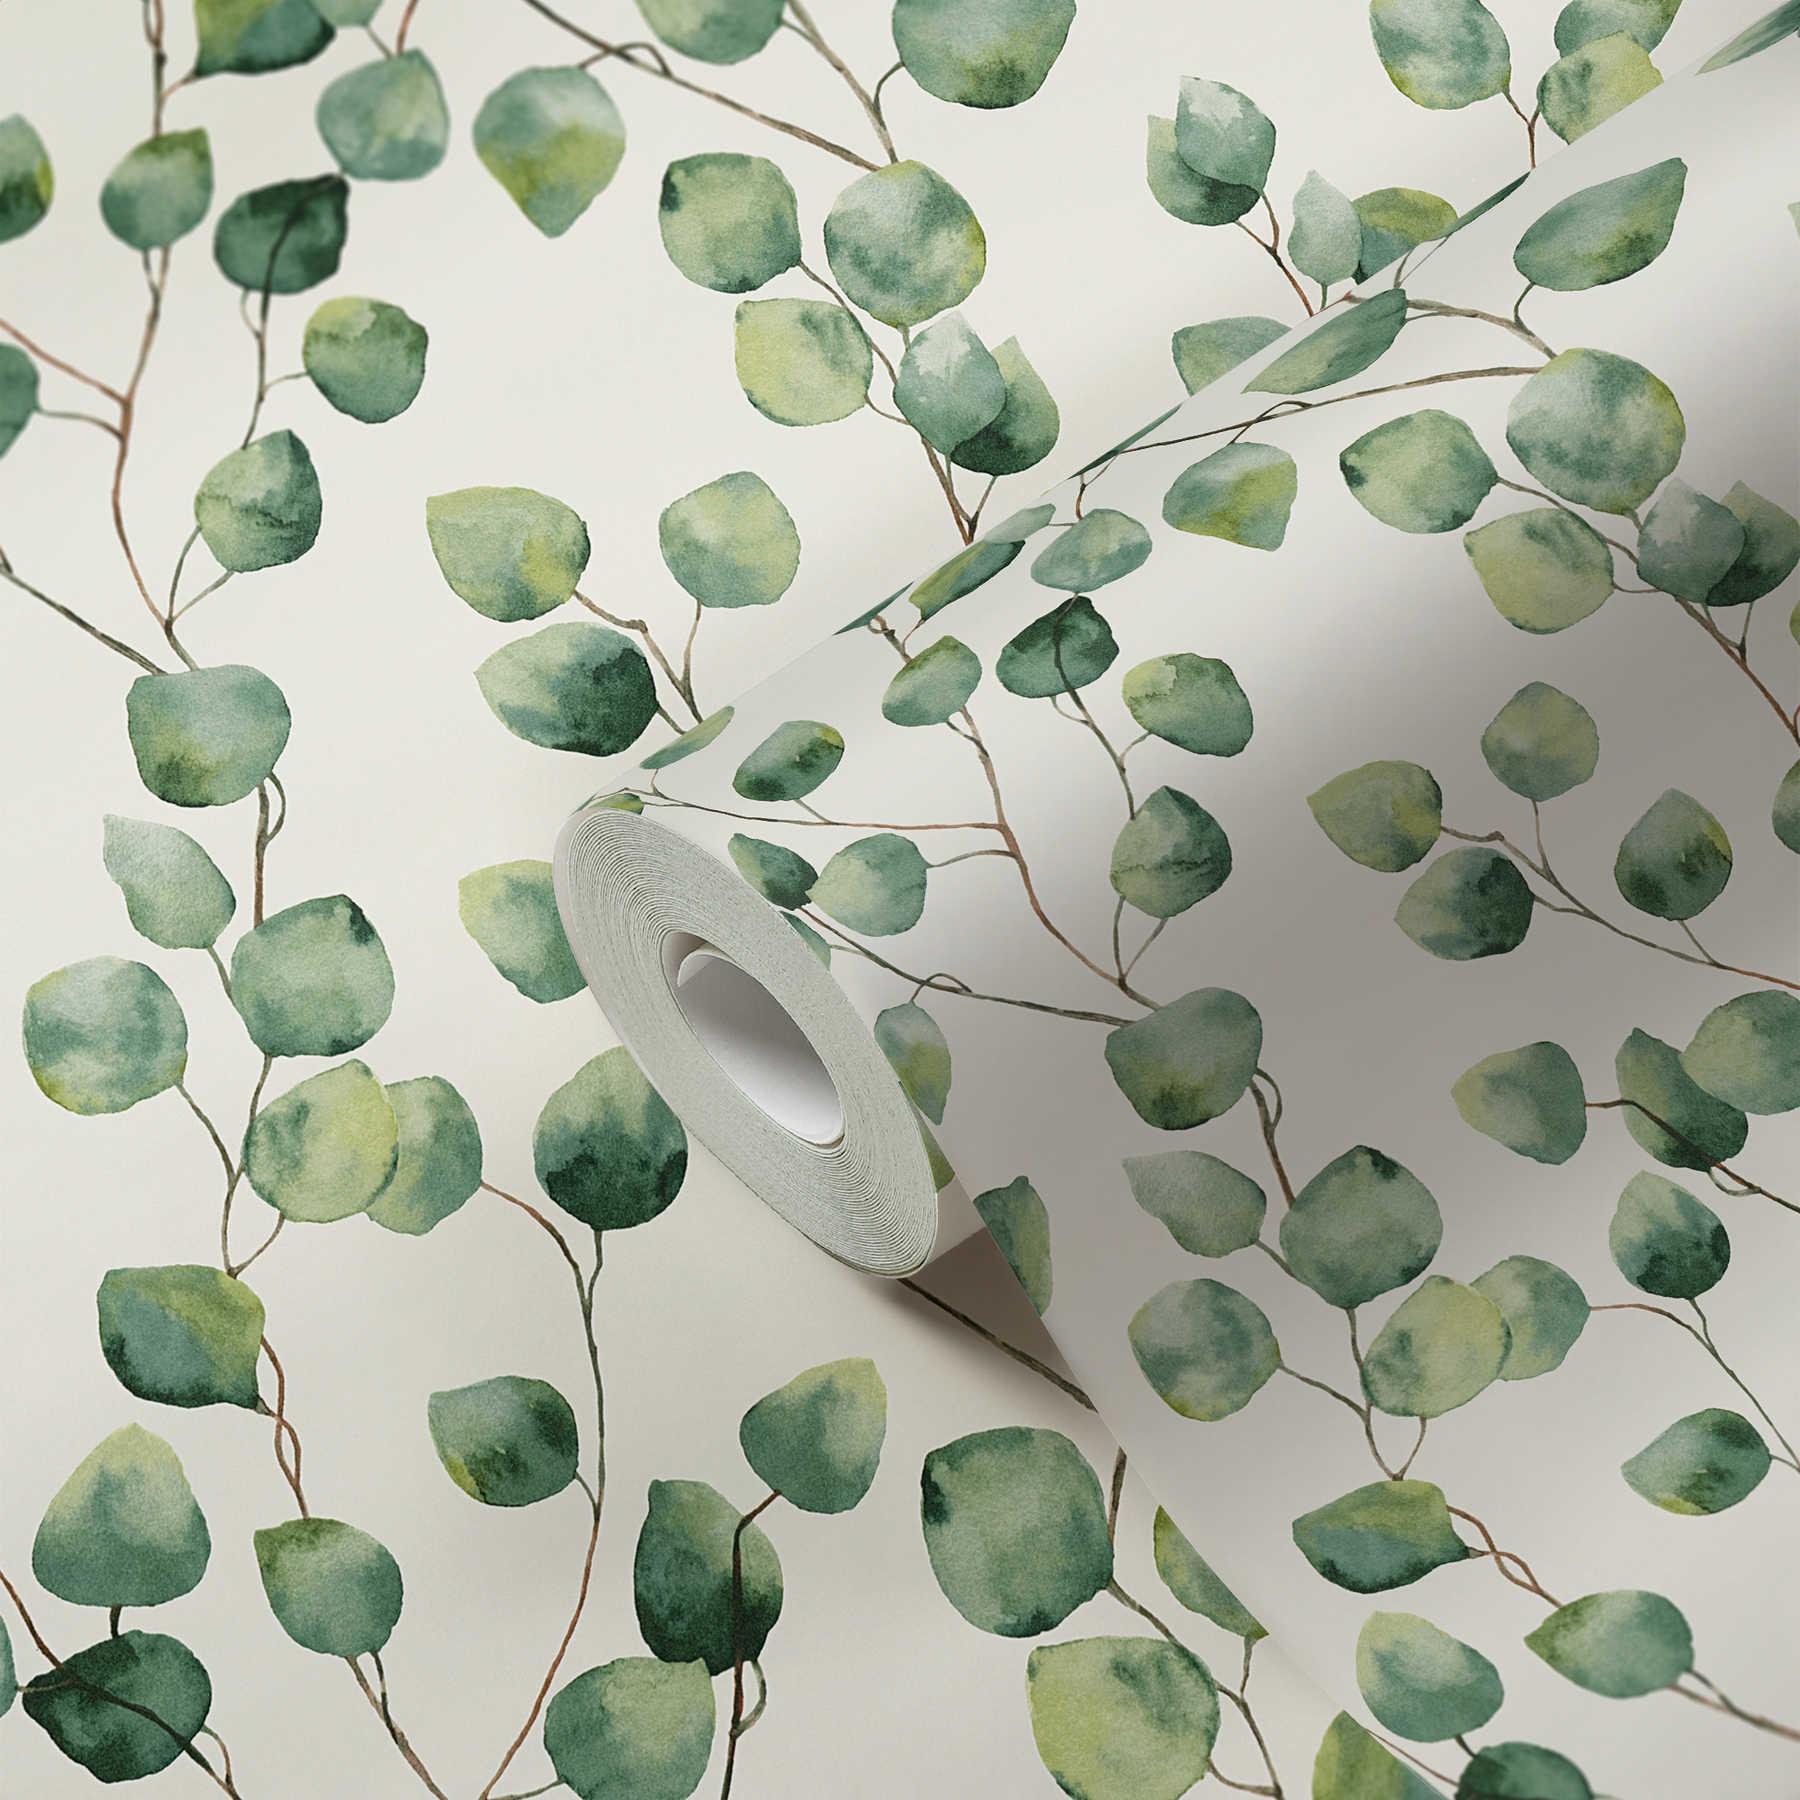             Carta da parati in stile acquerello "Tendini di foglie" - verde, bianco
        